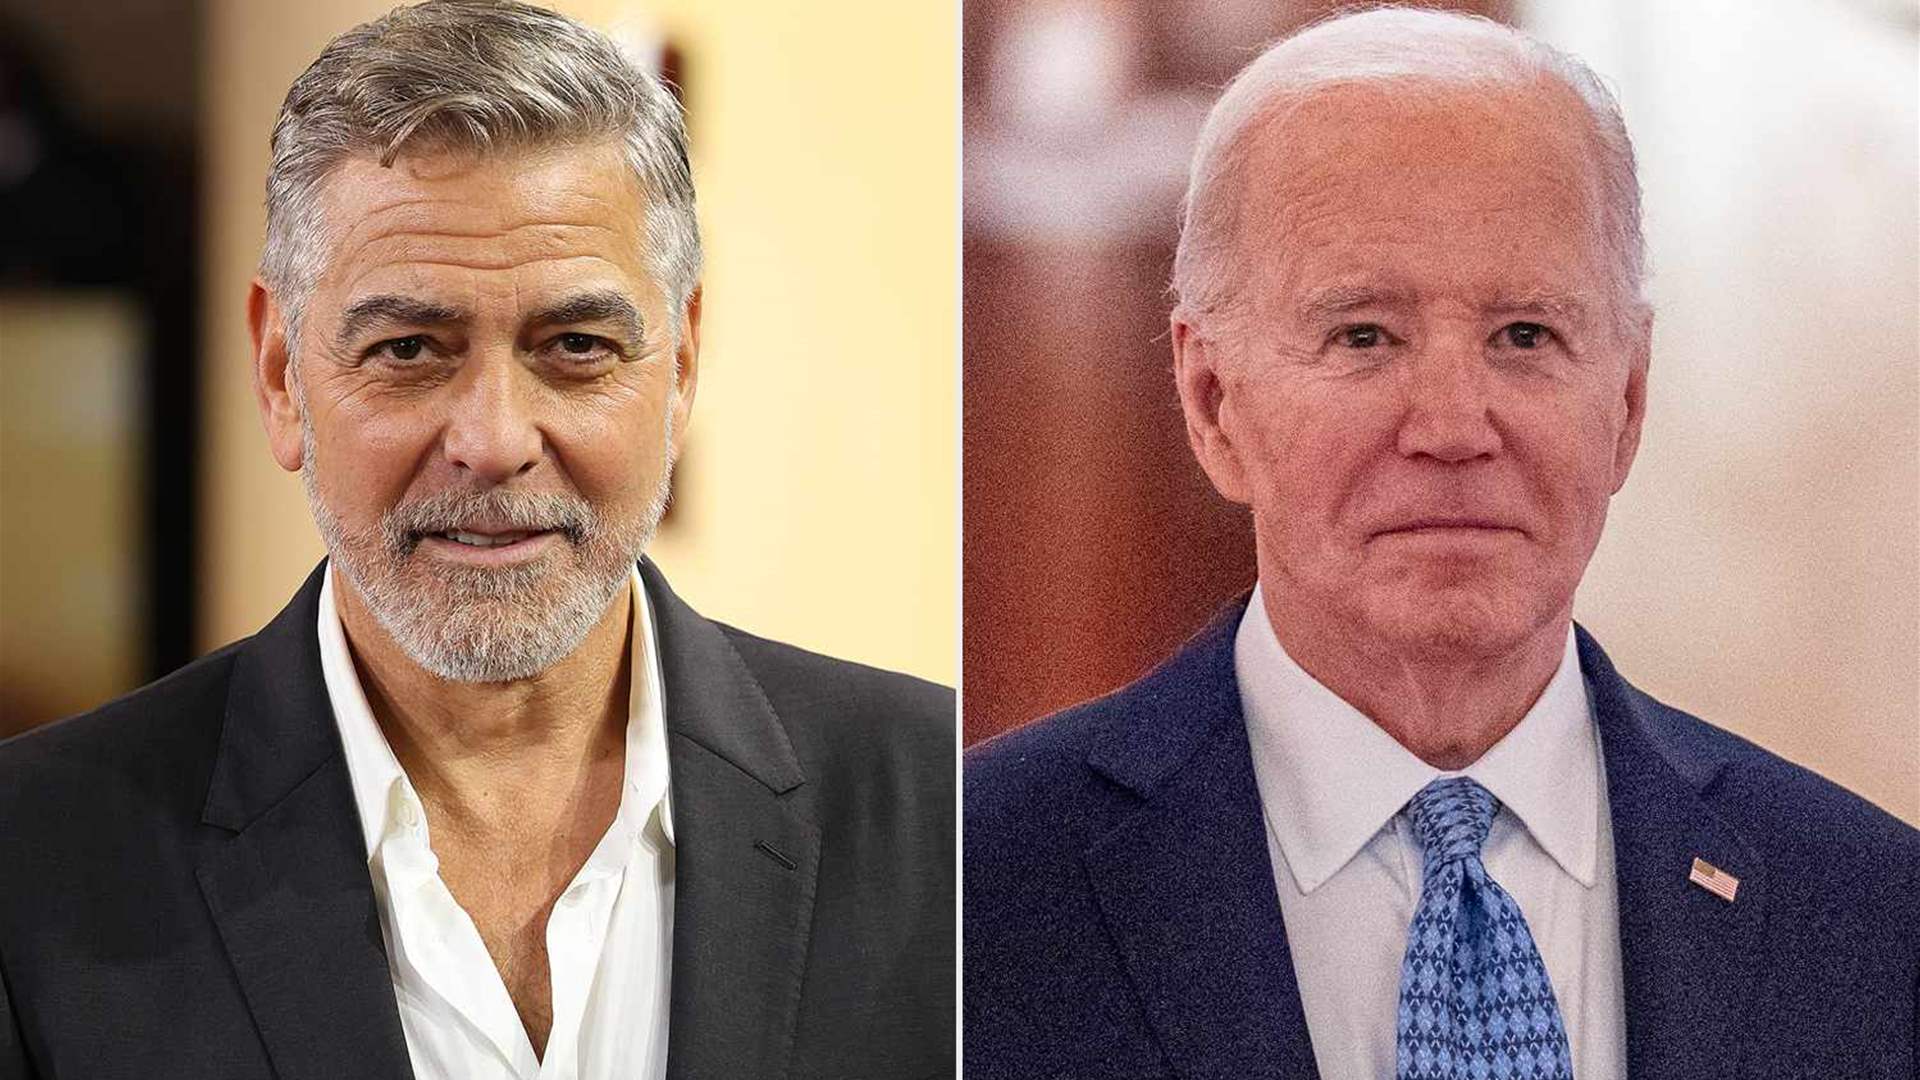 George Clooney supports Harris, lauds Biden for &#39;saving democracy:&#39; Statement